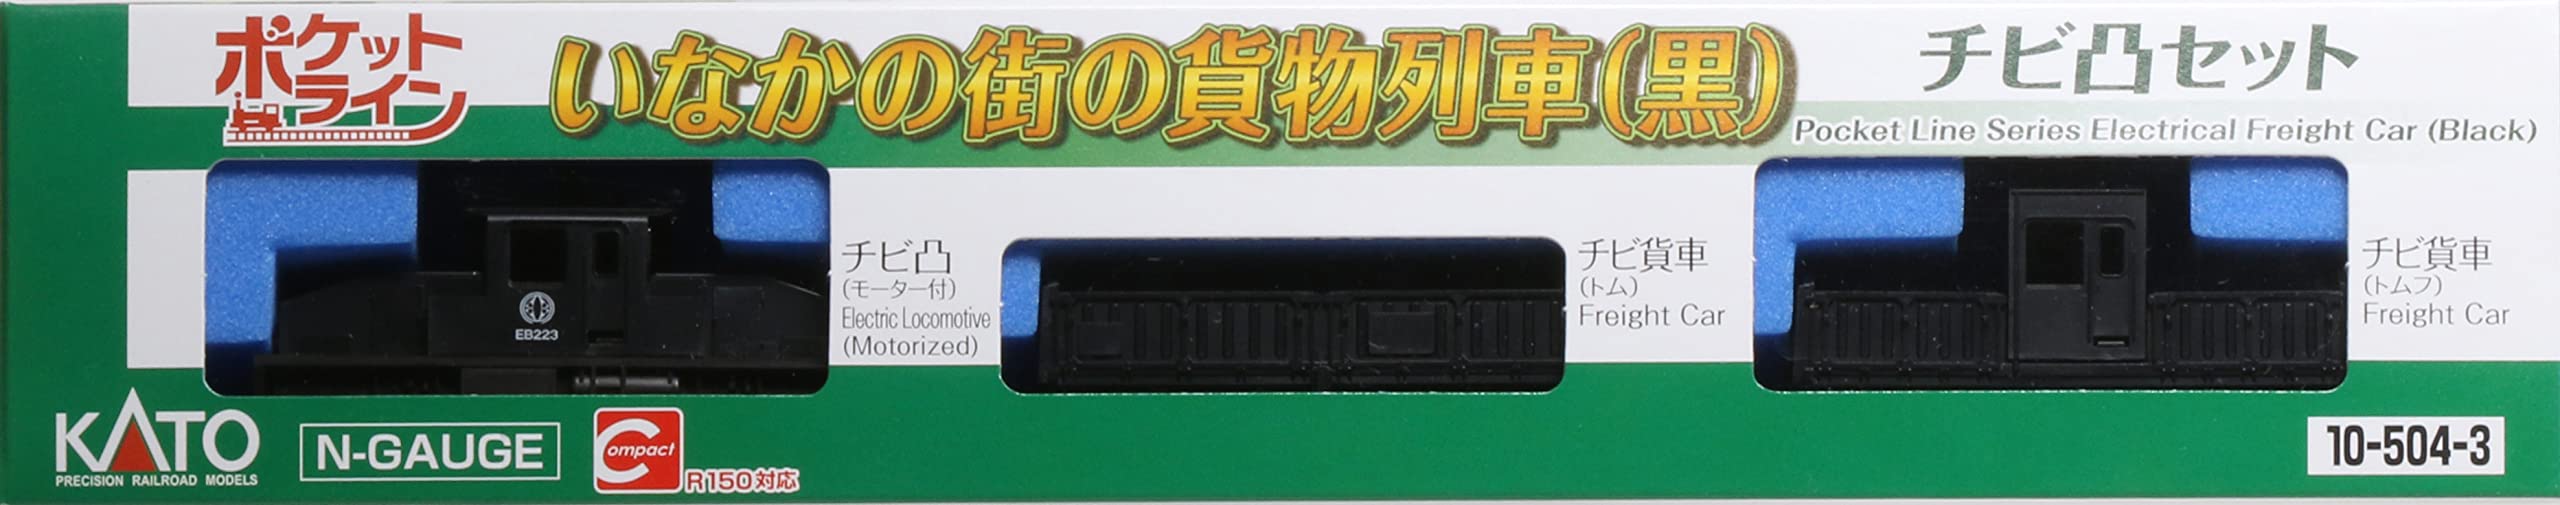 KATO N Gauge Pocket Line Series Electric Freight Car Set (Black) 10-504-3 NEW_3